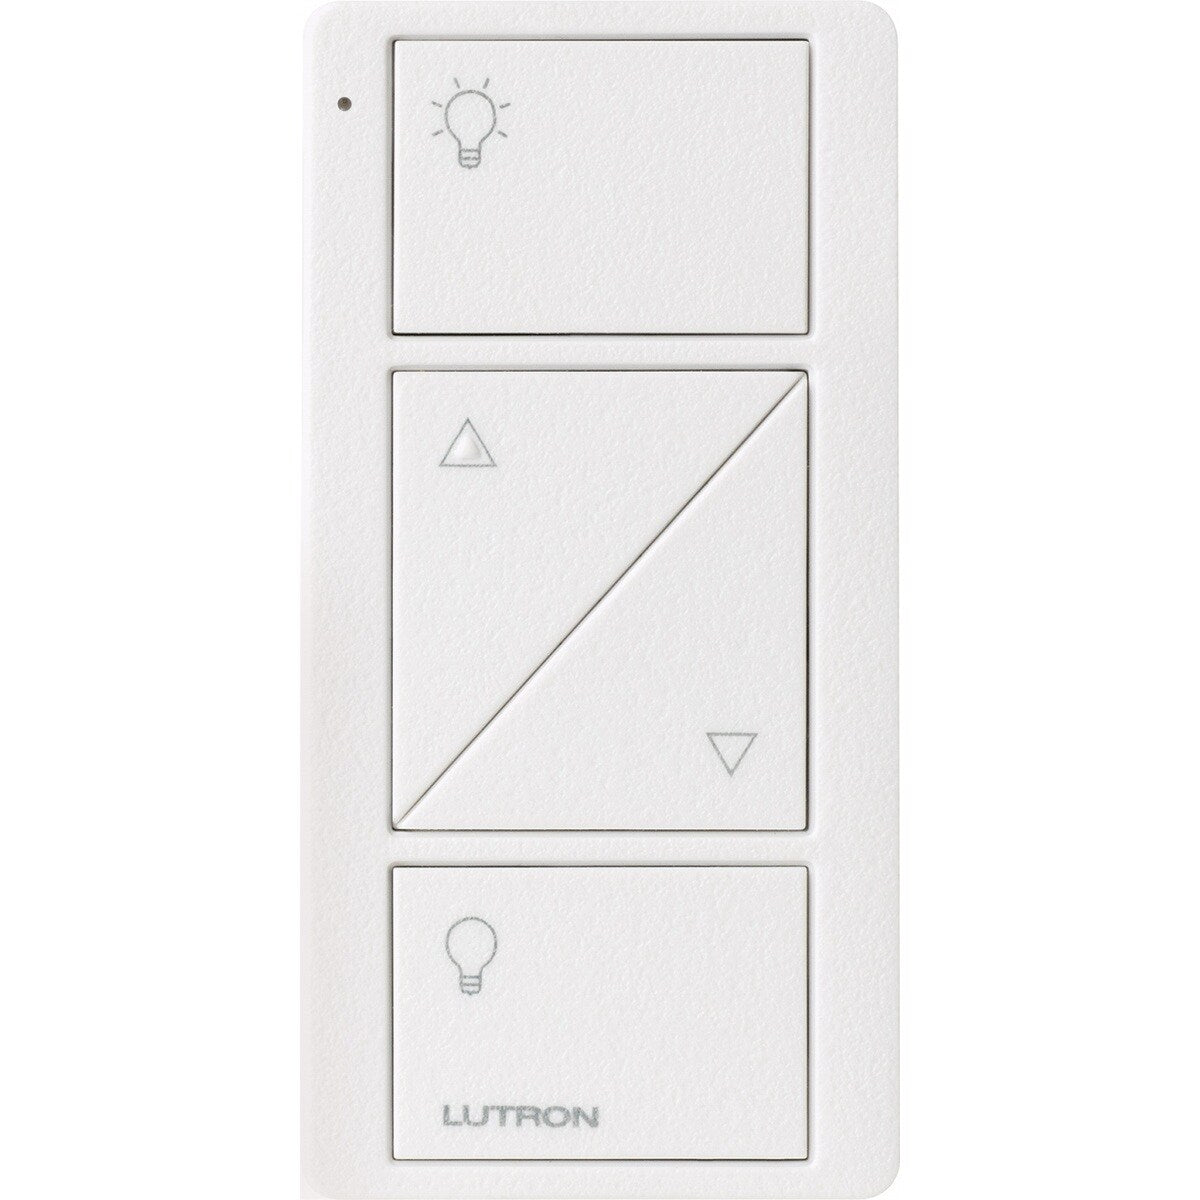 Lutron 2按鈕 Pico 射頻無線控制器(帶燈光開/關/光/暗的圖示) - LINKO Shop